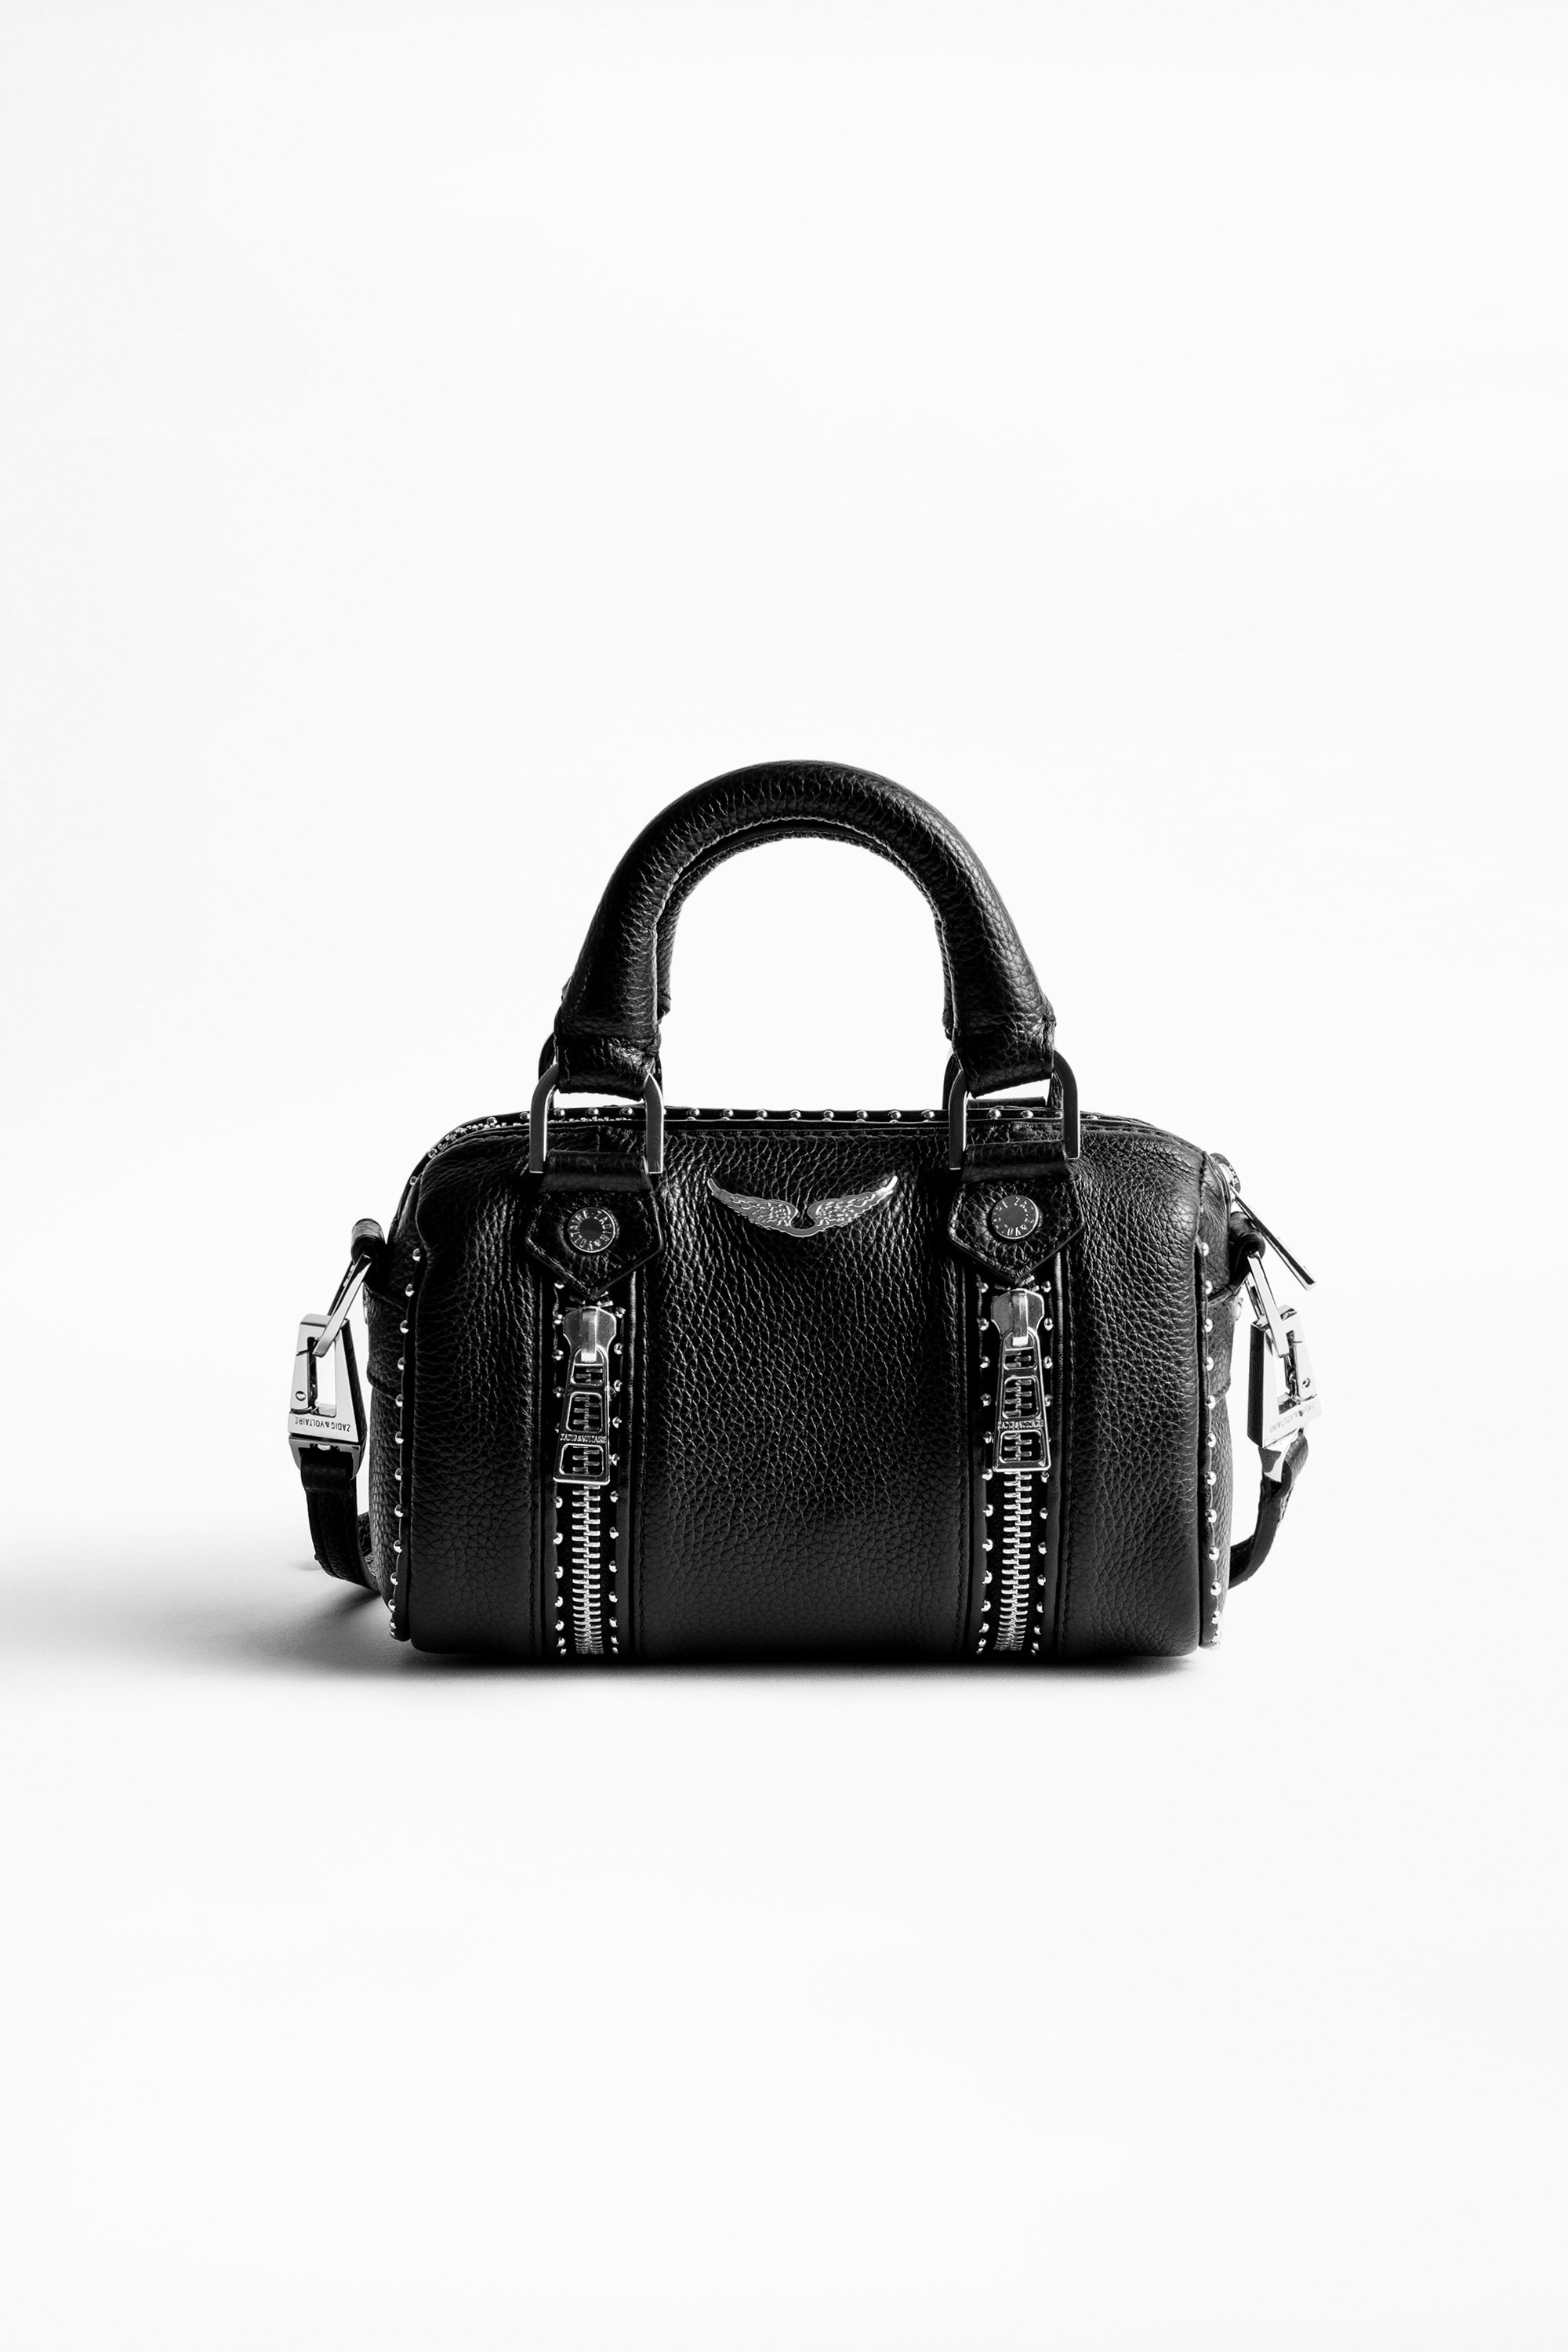 Sunny ミニバッグ - Women's black mini bag in grained leather.